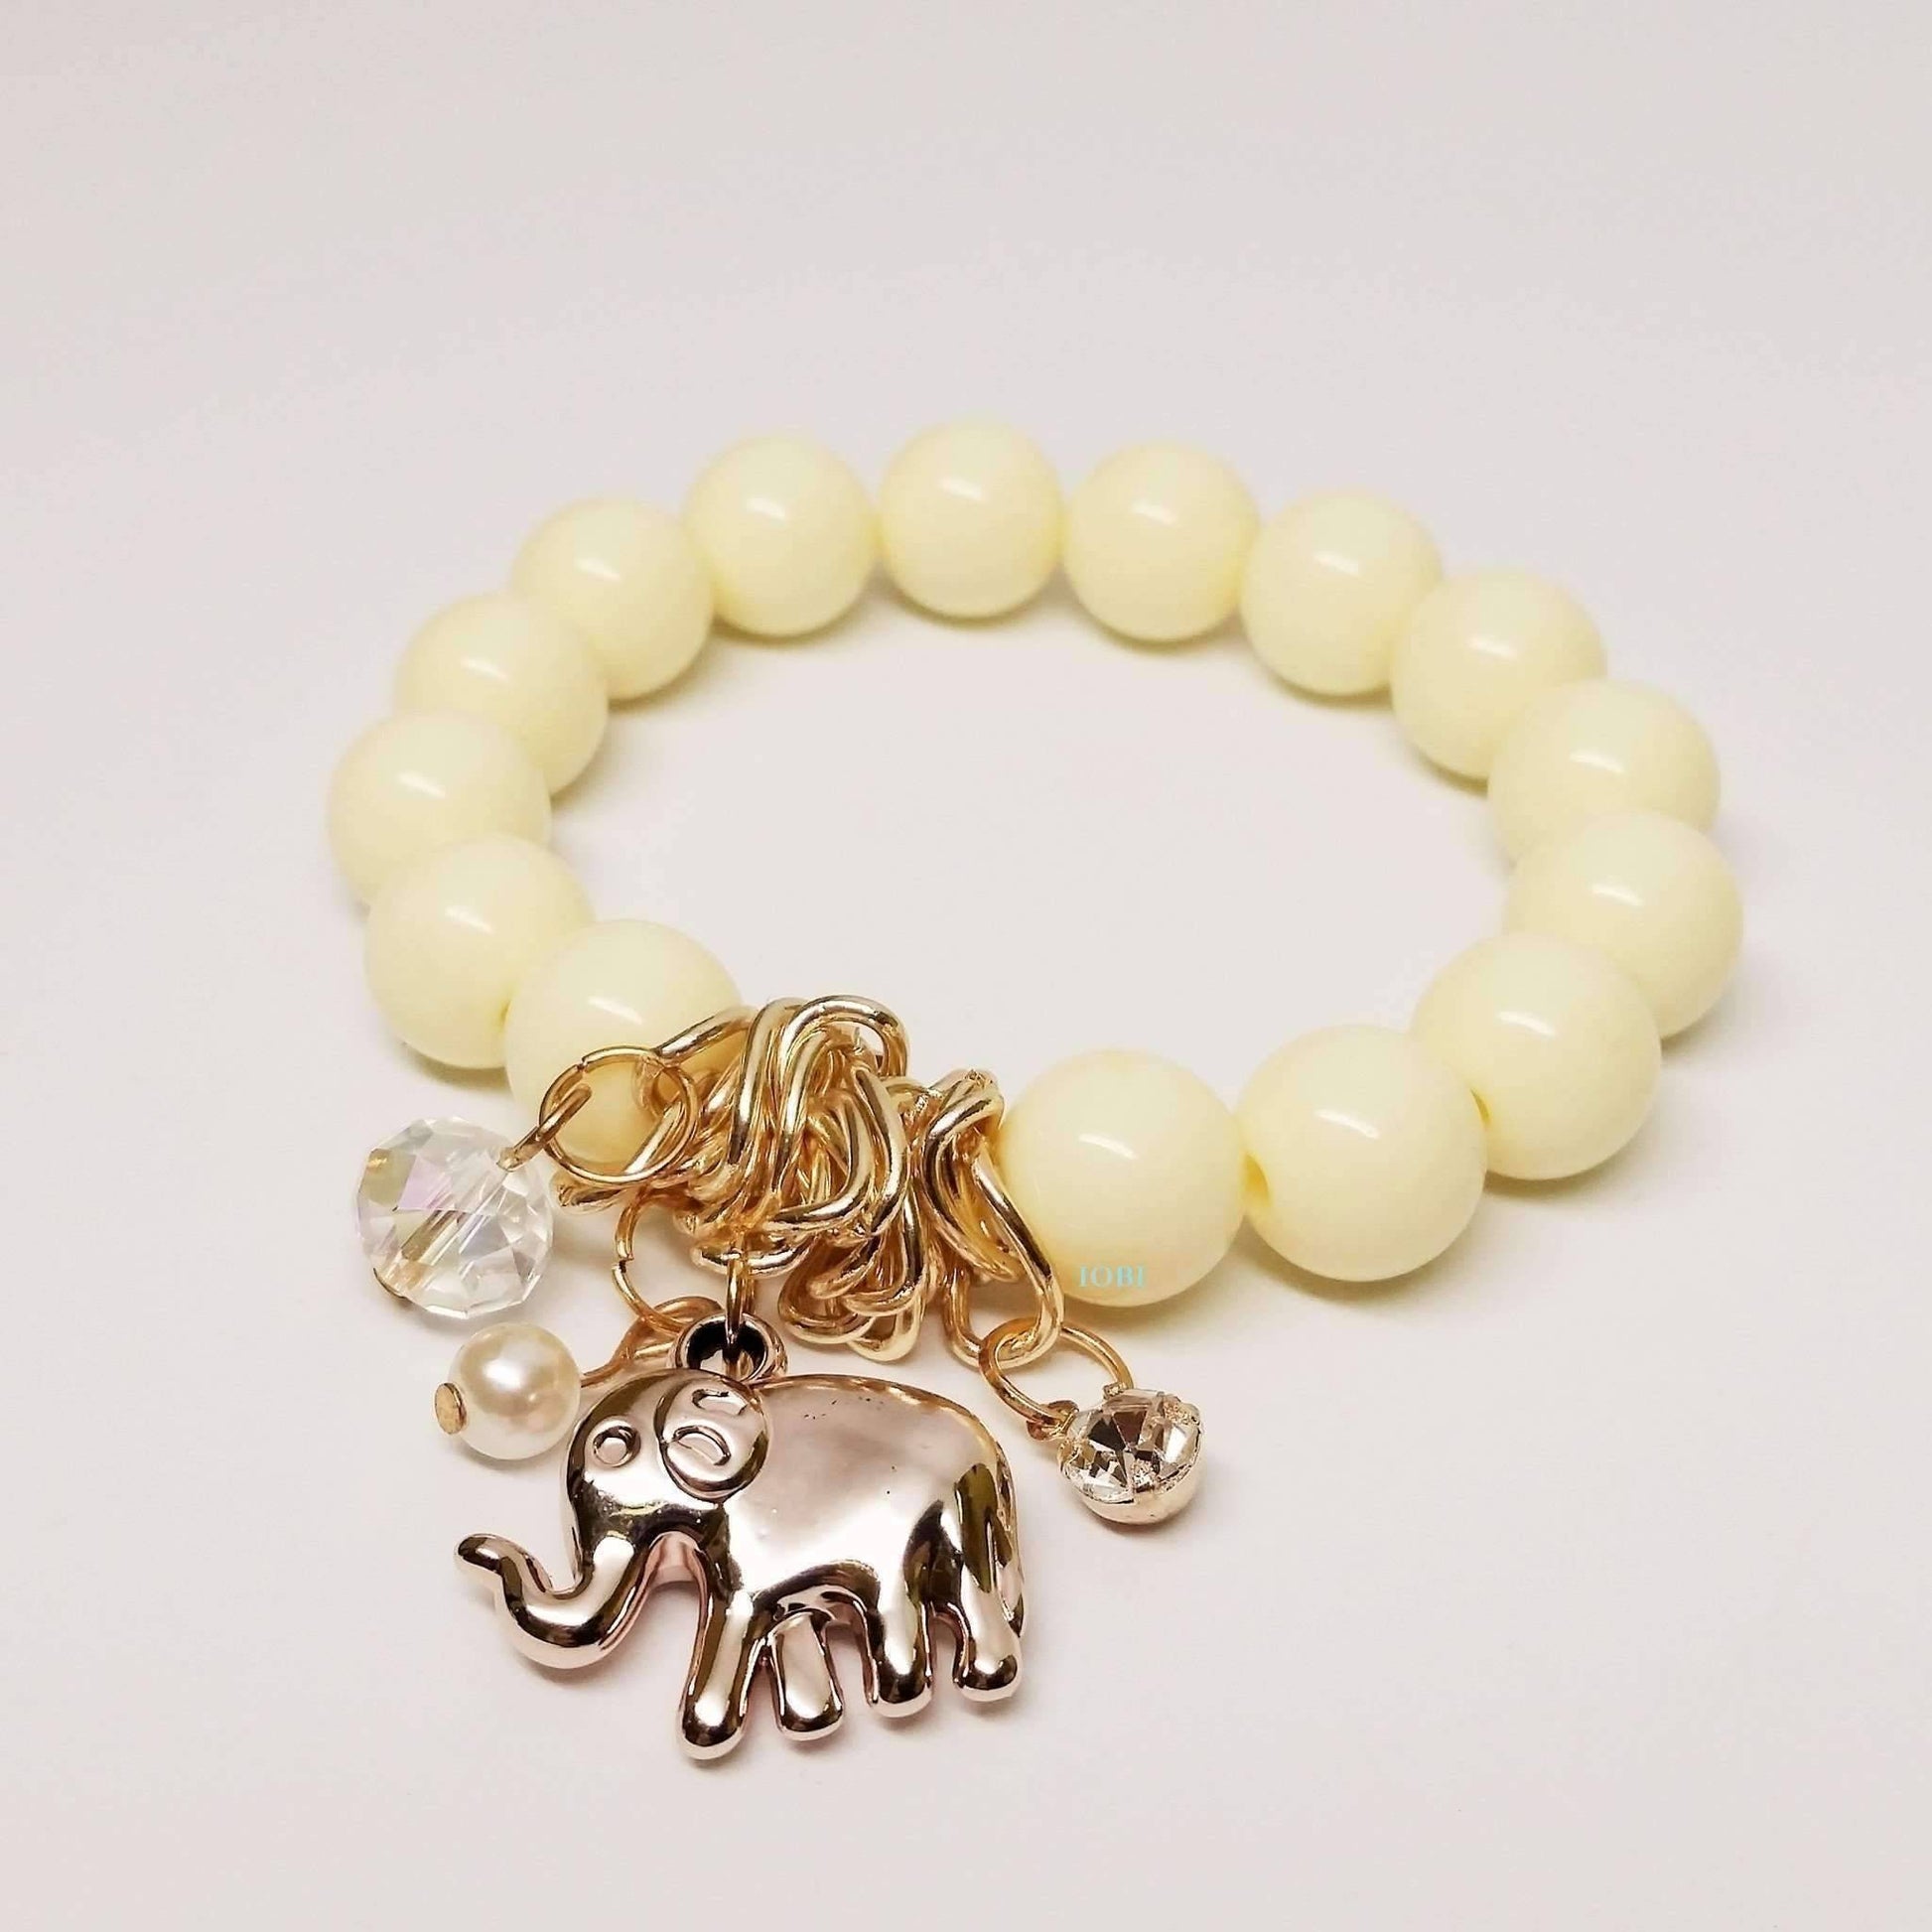 Feshionn IOBI bracelets Ivory White Lucky Elephant Charm Bead Bracelet - Choose Your Color